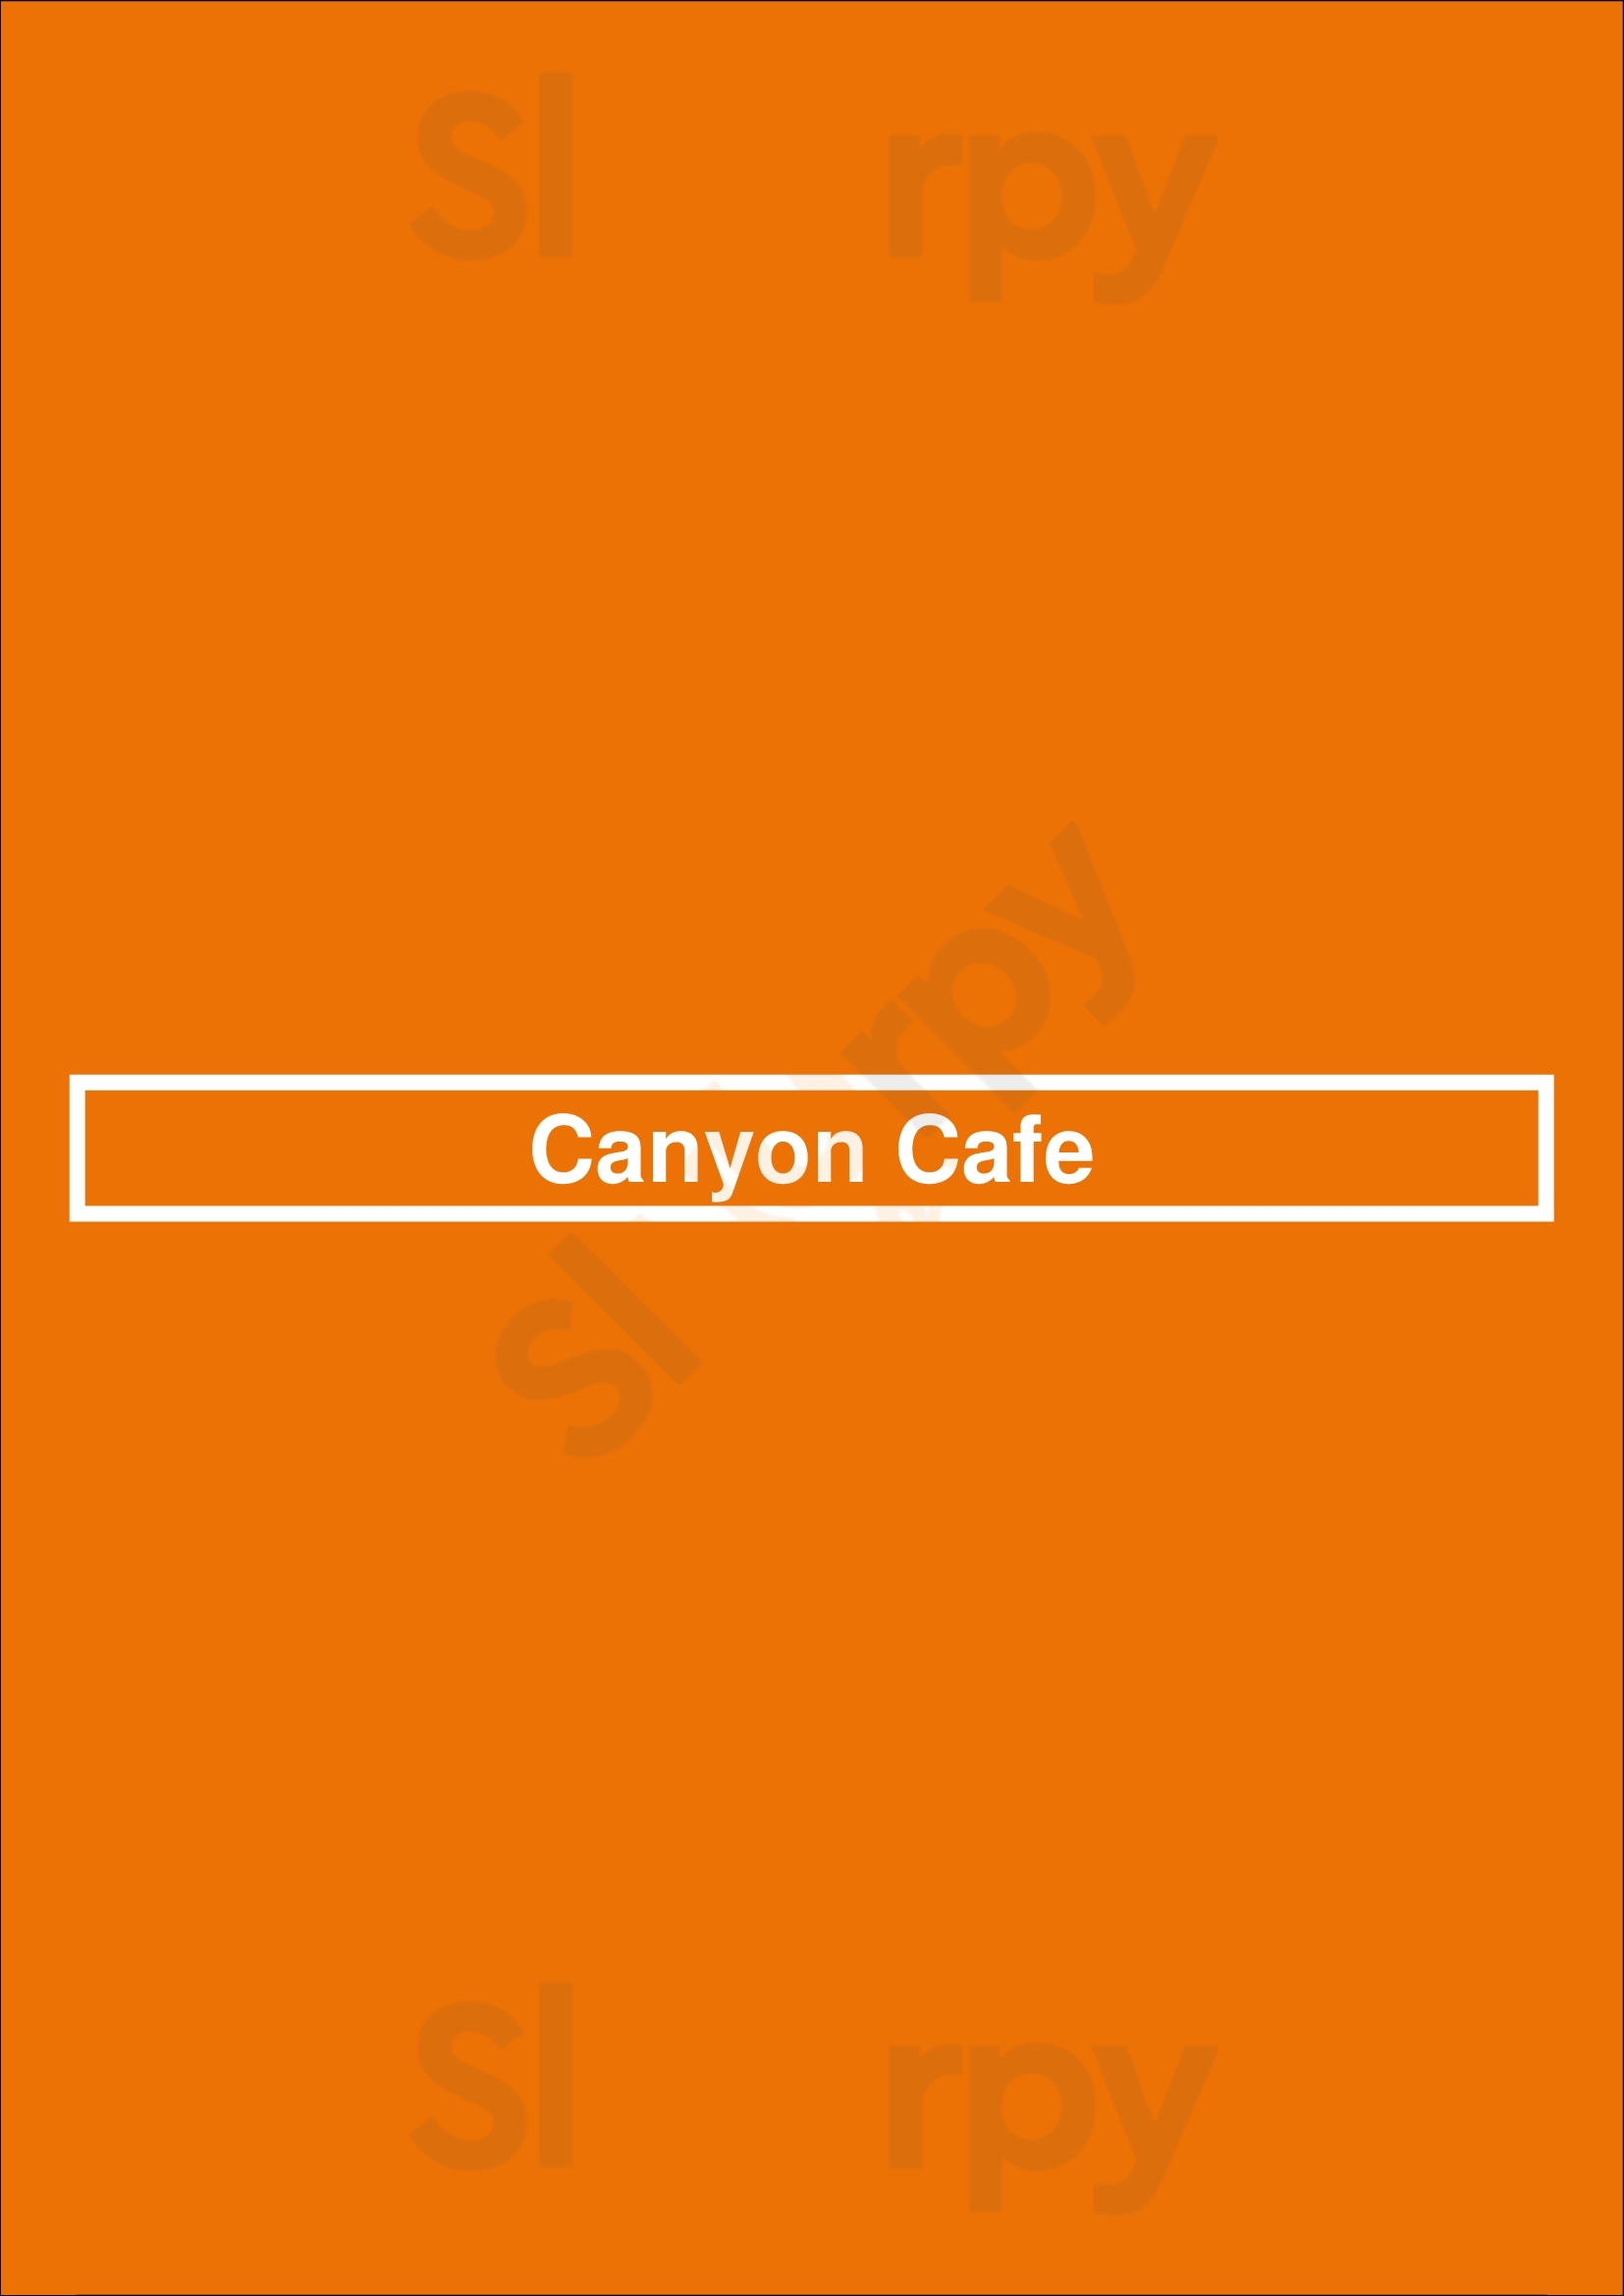 Canyon Cafe Tucson Menu - 1